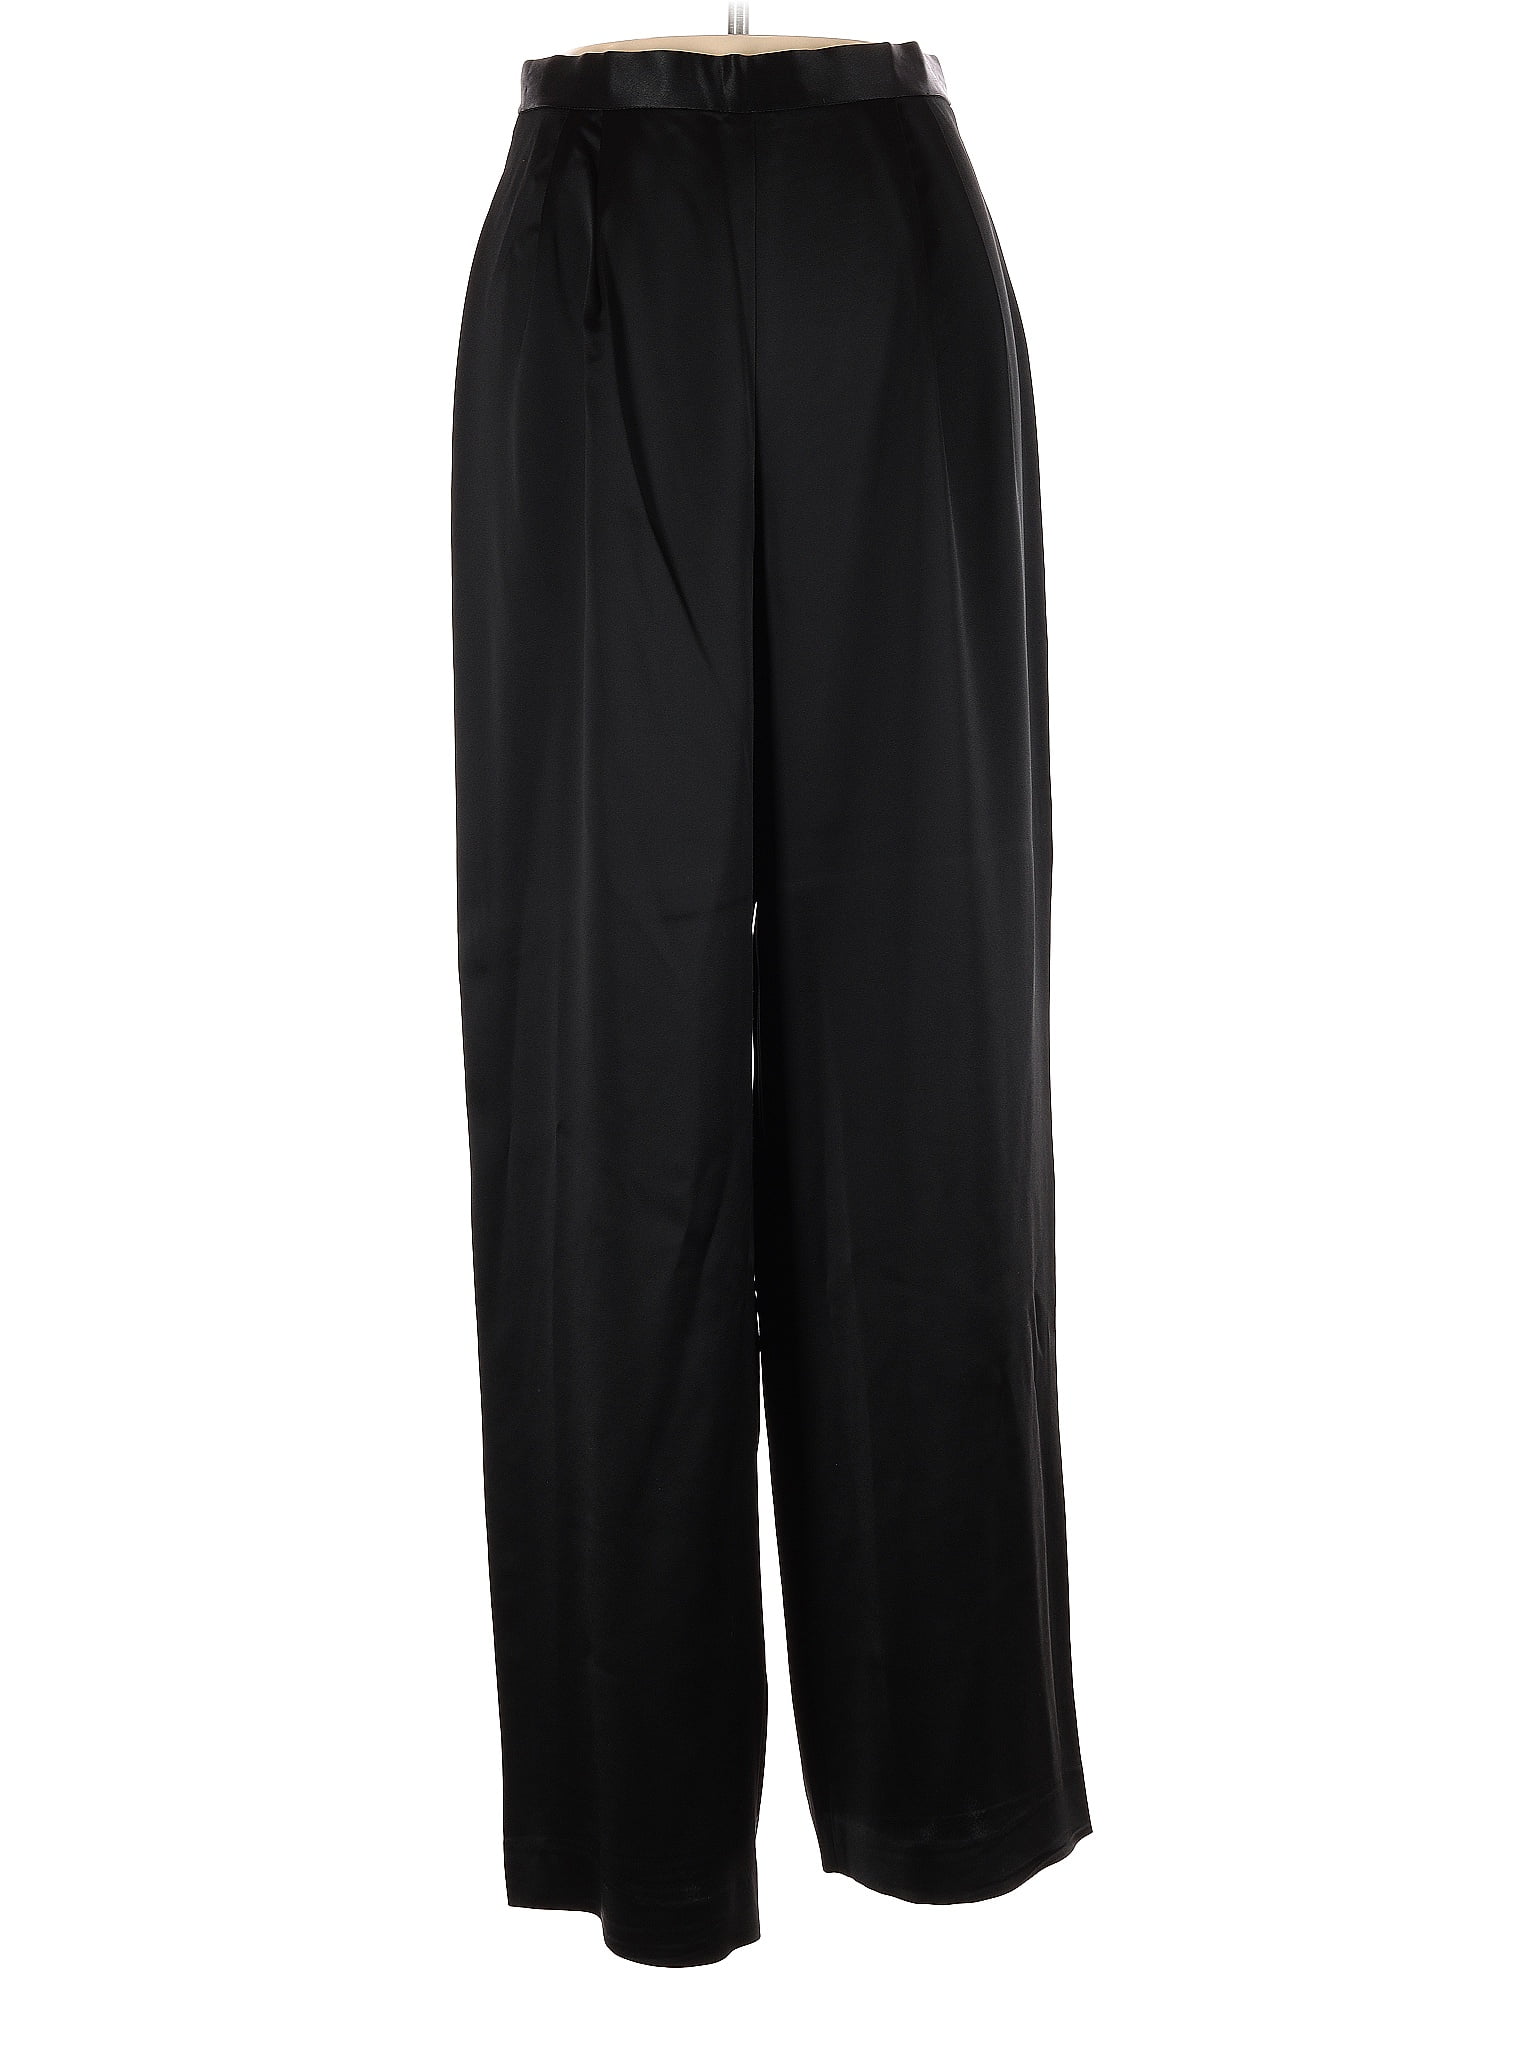 Carmen Marc Valvo 100% Acetate Solid Black Dress Pants Size 6 - 78% off ...